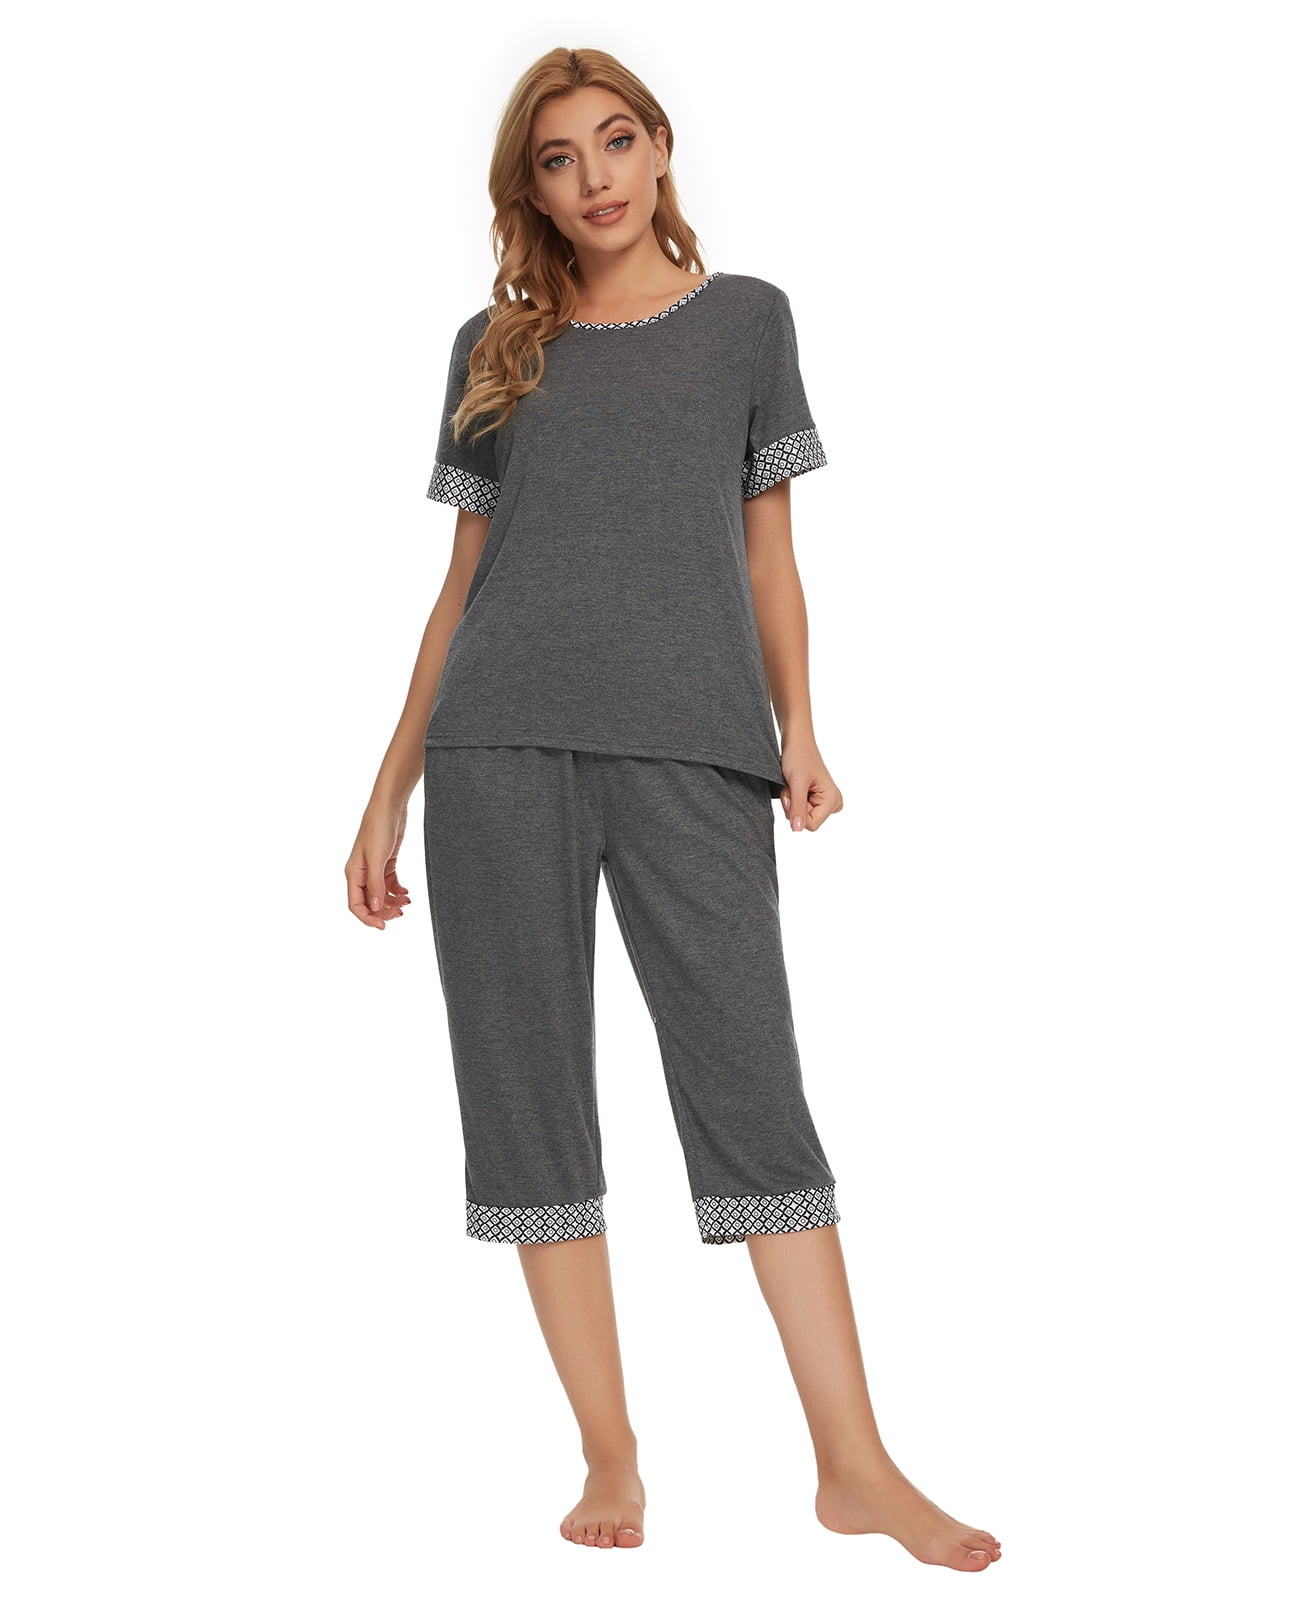 MintLimit Women's Pajama Sets with Capri Pants and Sleepwear Tops ...